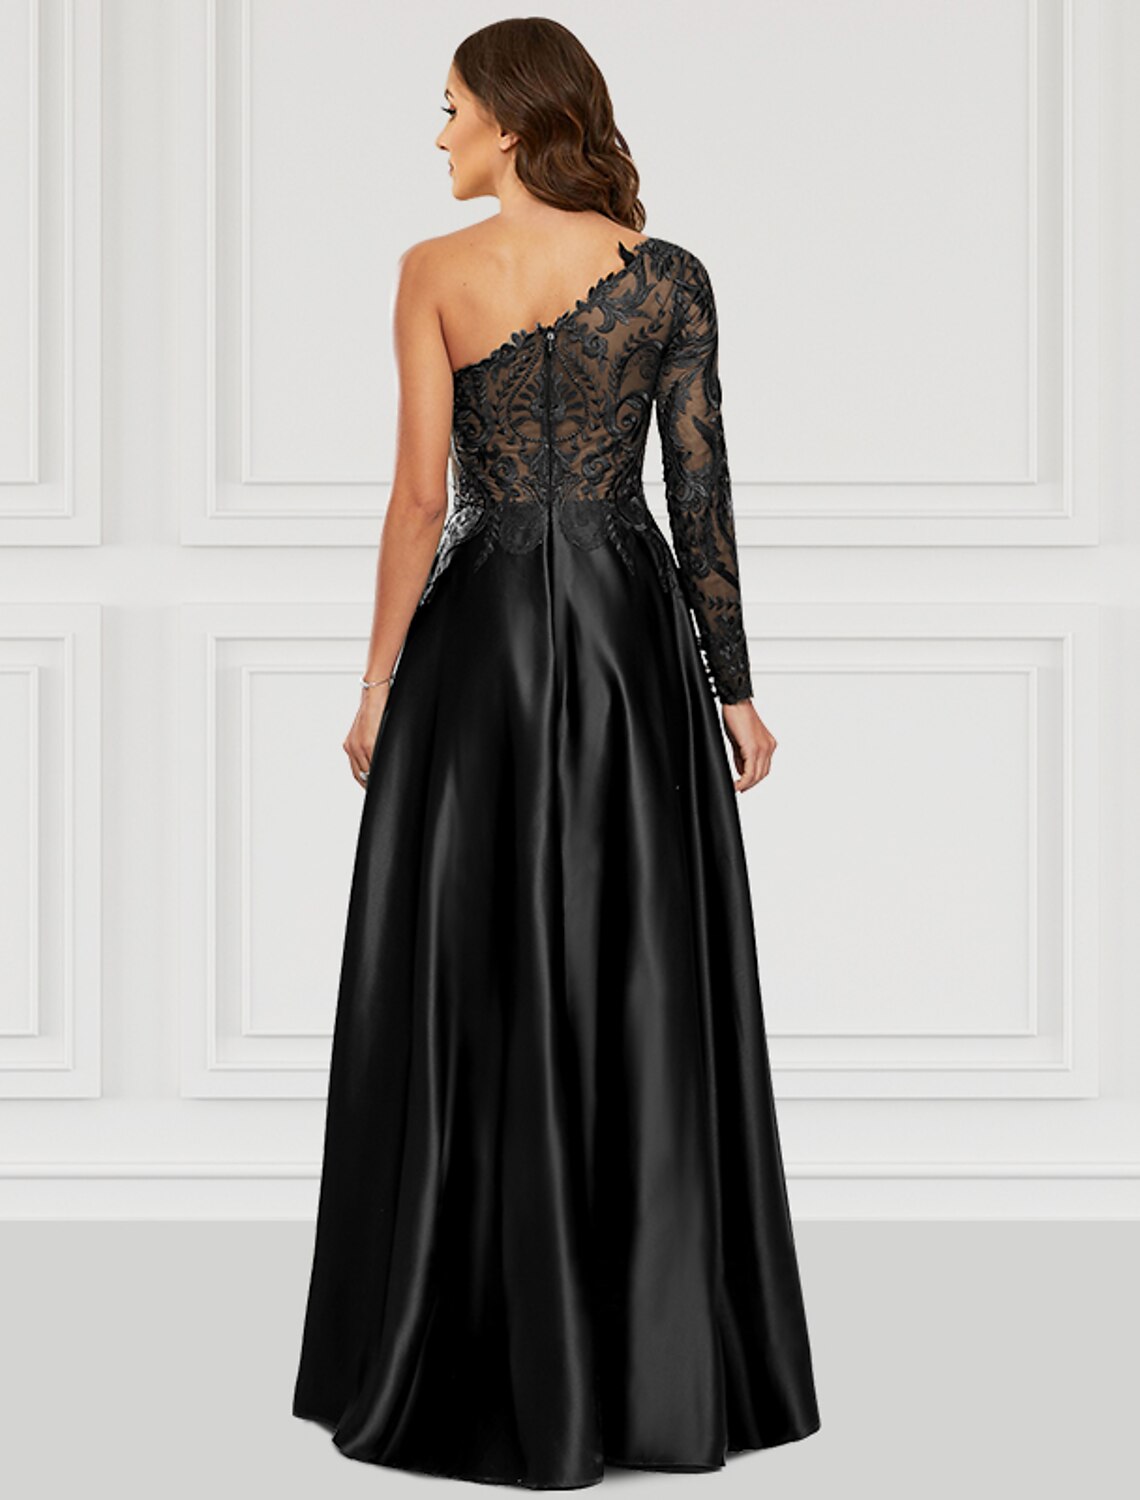 A-Line Prom Dresses Black Dress Party Wear Floor Length Long Sleeve One Shoulder Satin with Slit